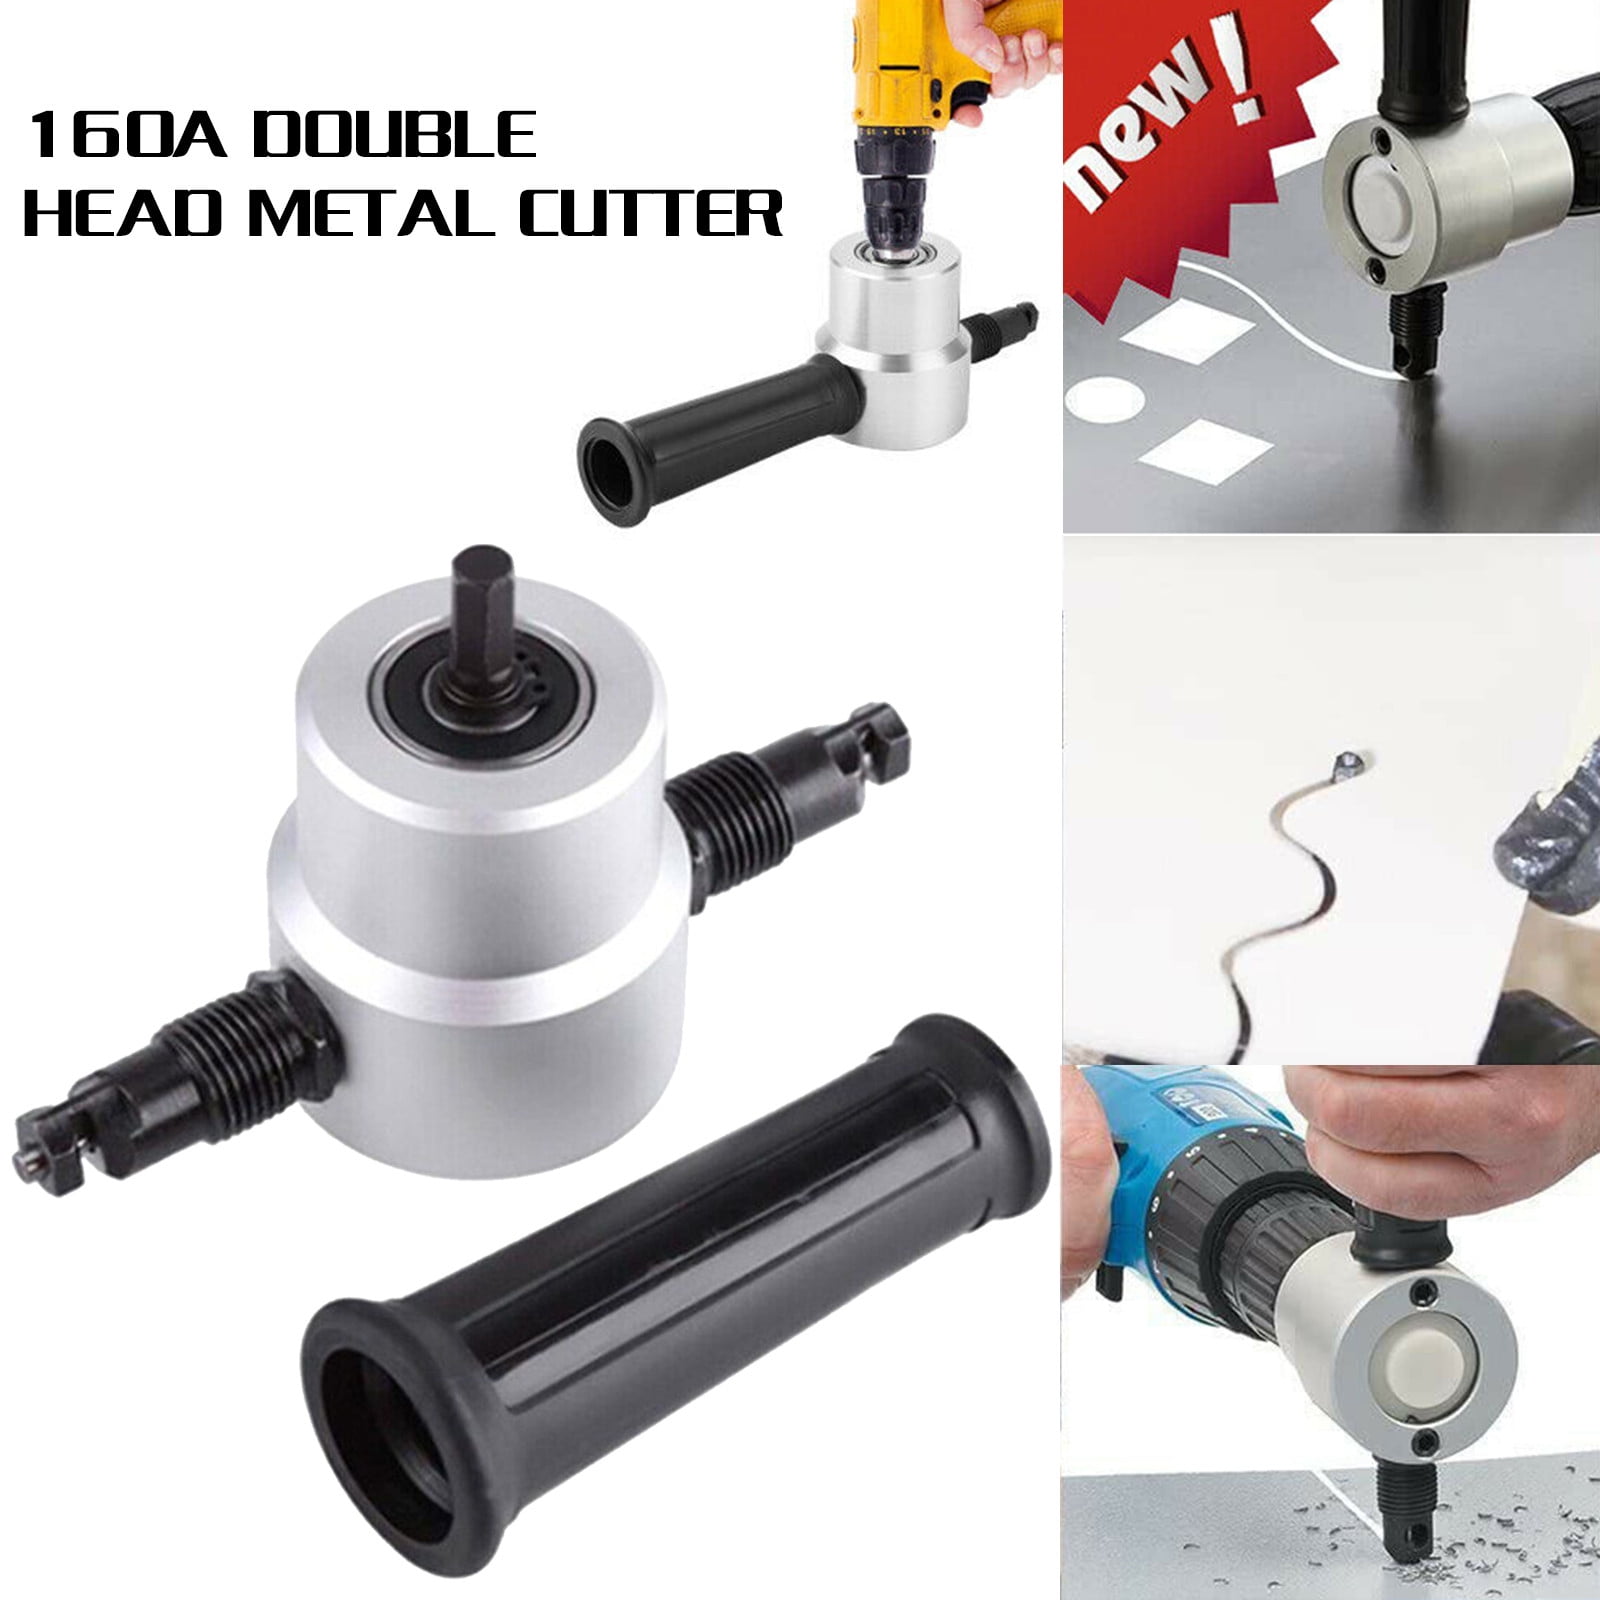 Double Head Sheet Metal Nibbler Cutter Cutting Saw Power Drill Attachment 